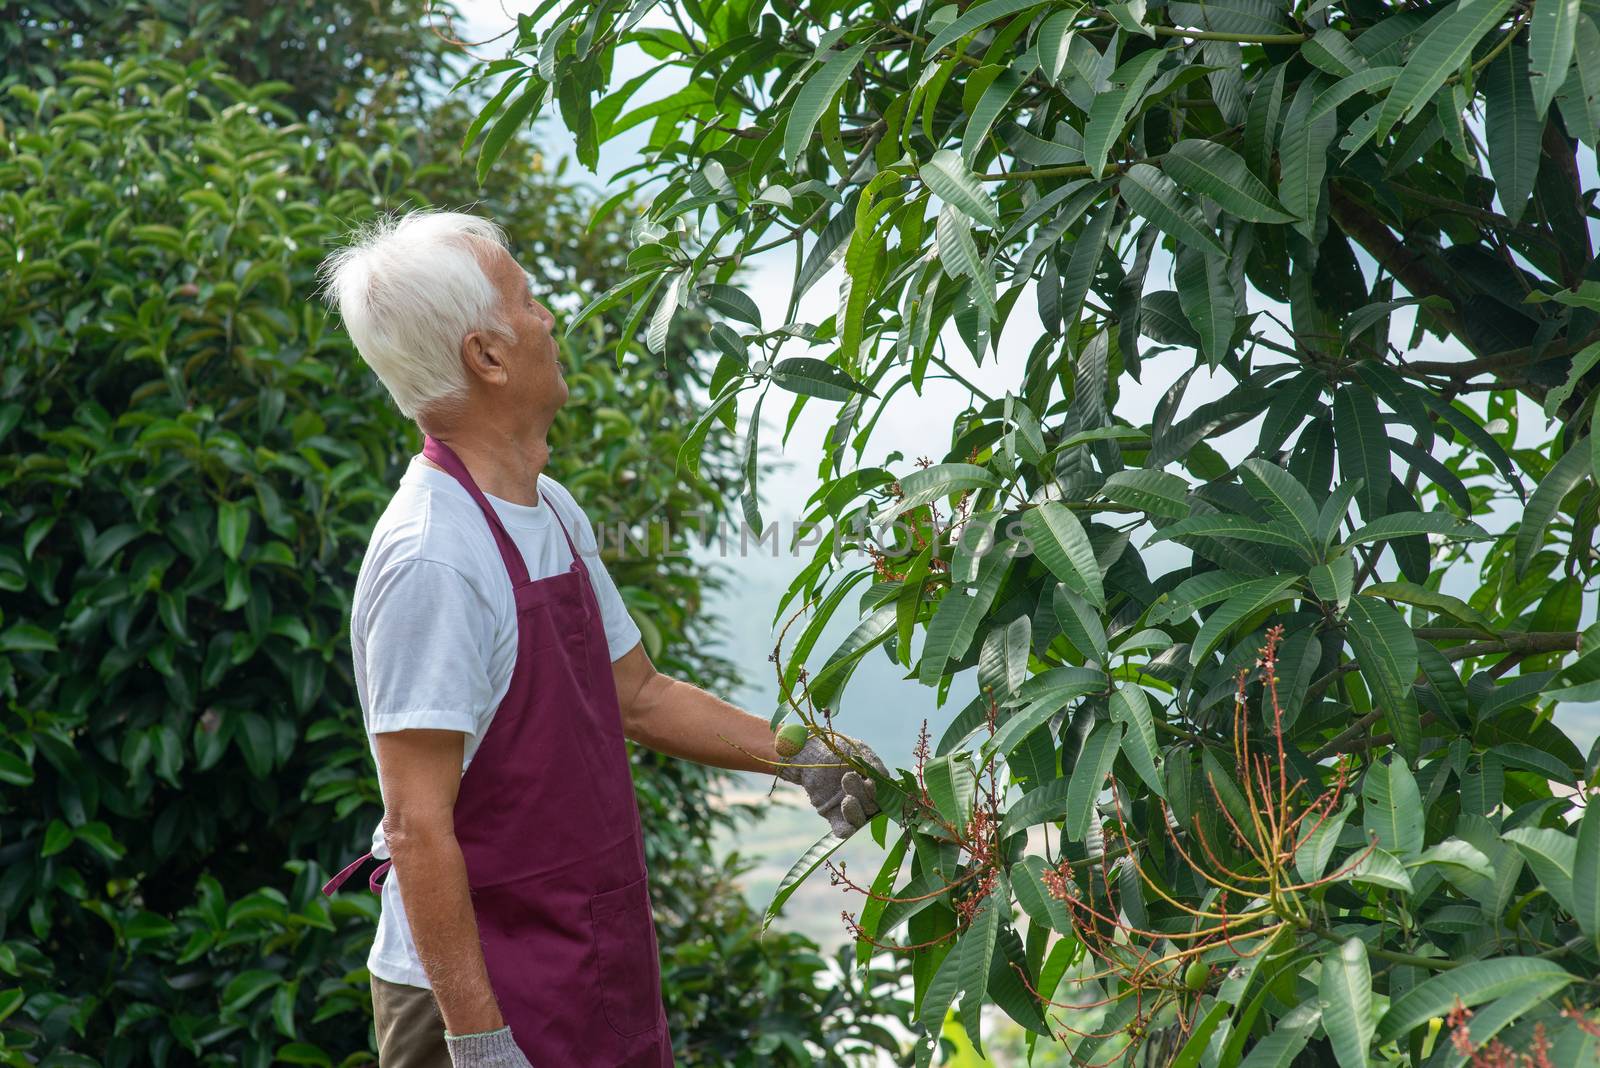 Farmer examining mango tree in orchard.